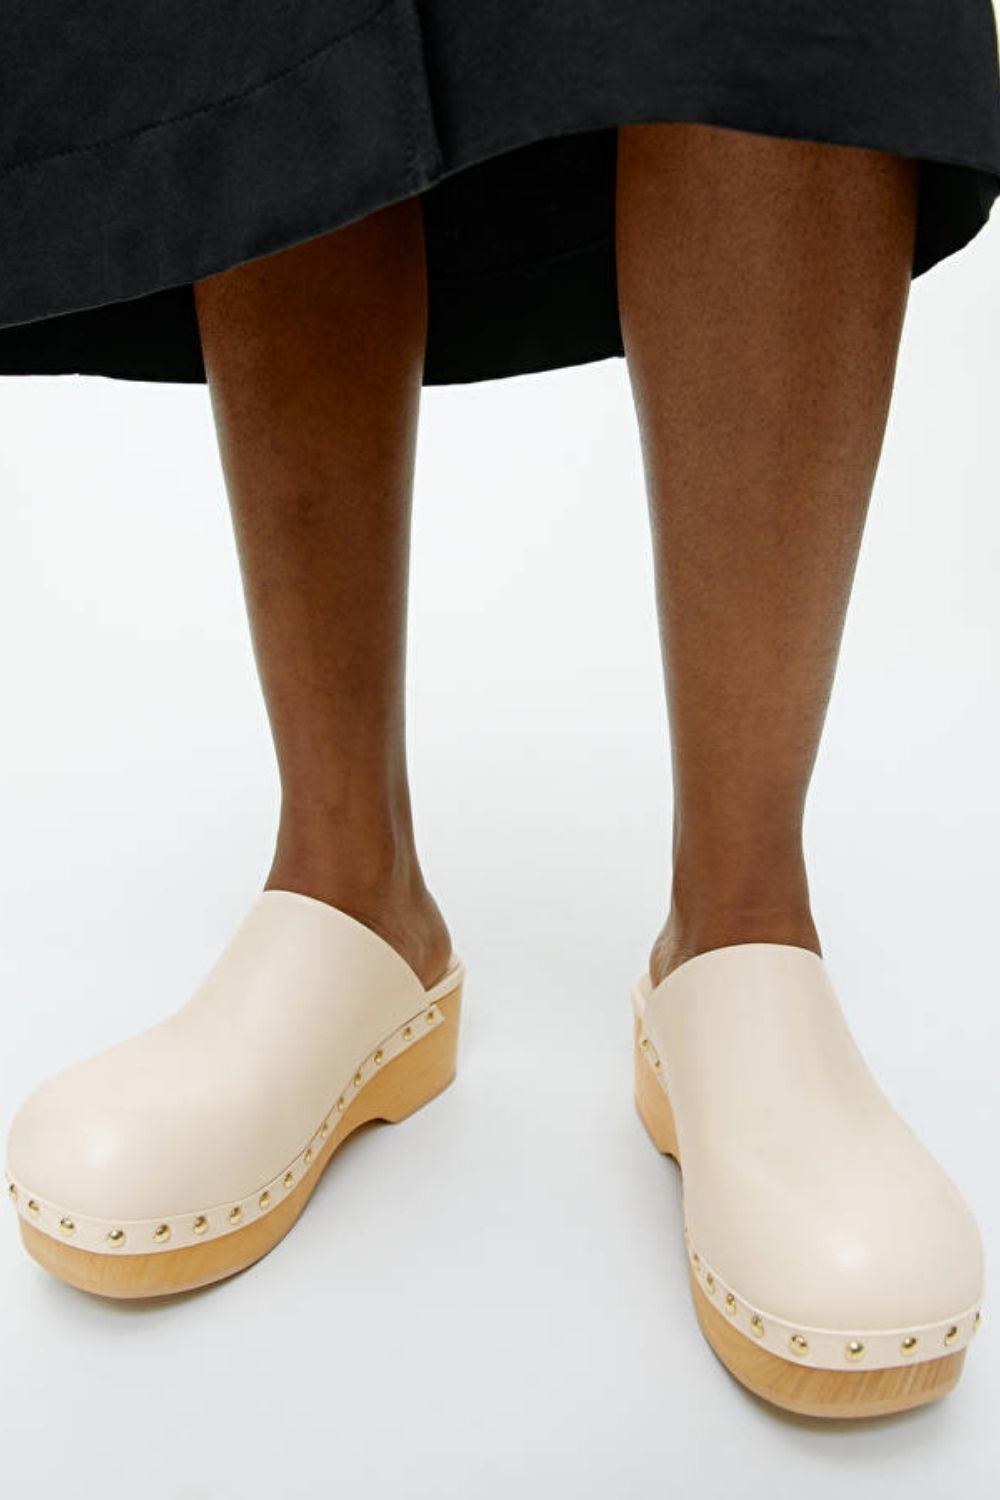 The-Gloss-Magazine-French-women-shoe-trend-6